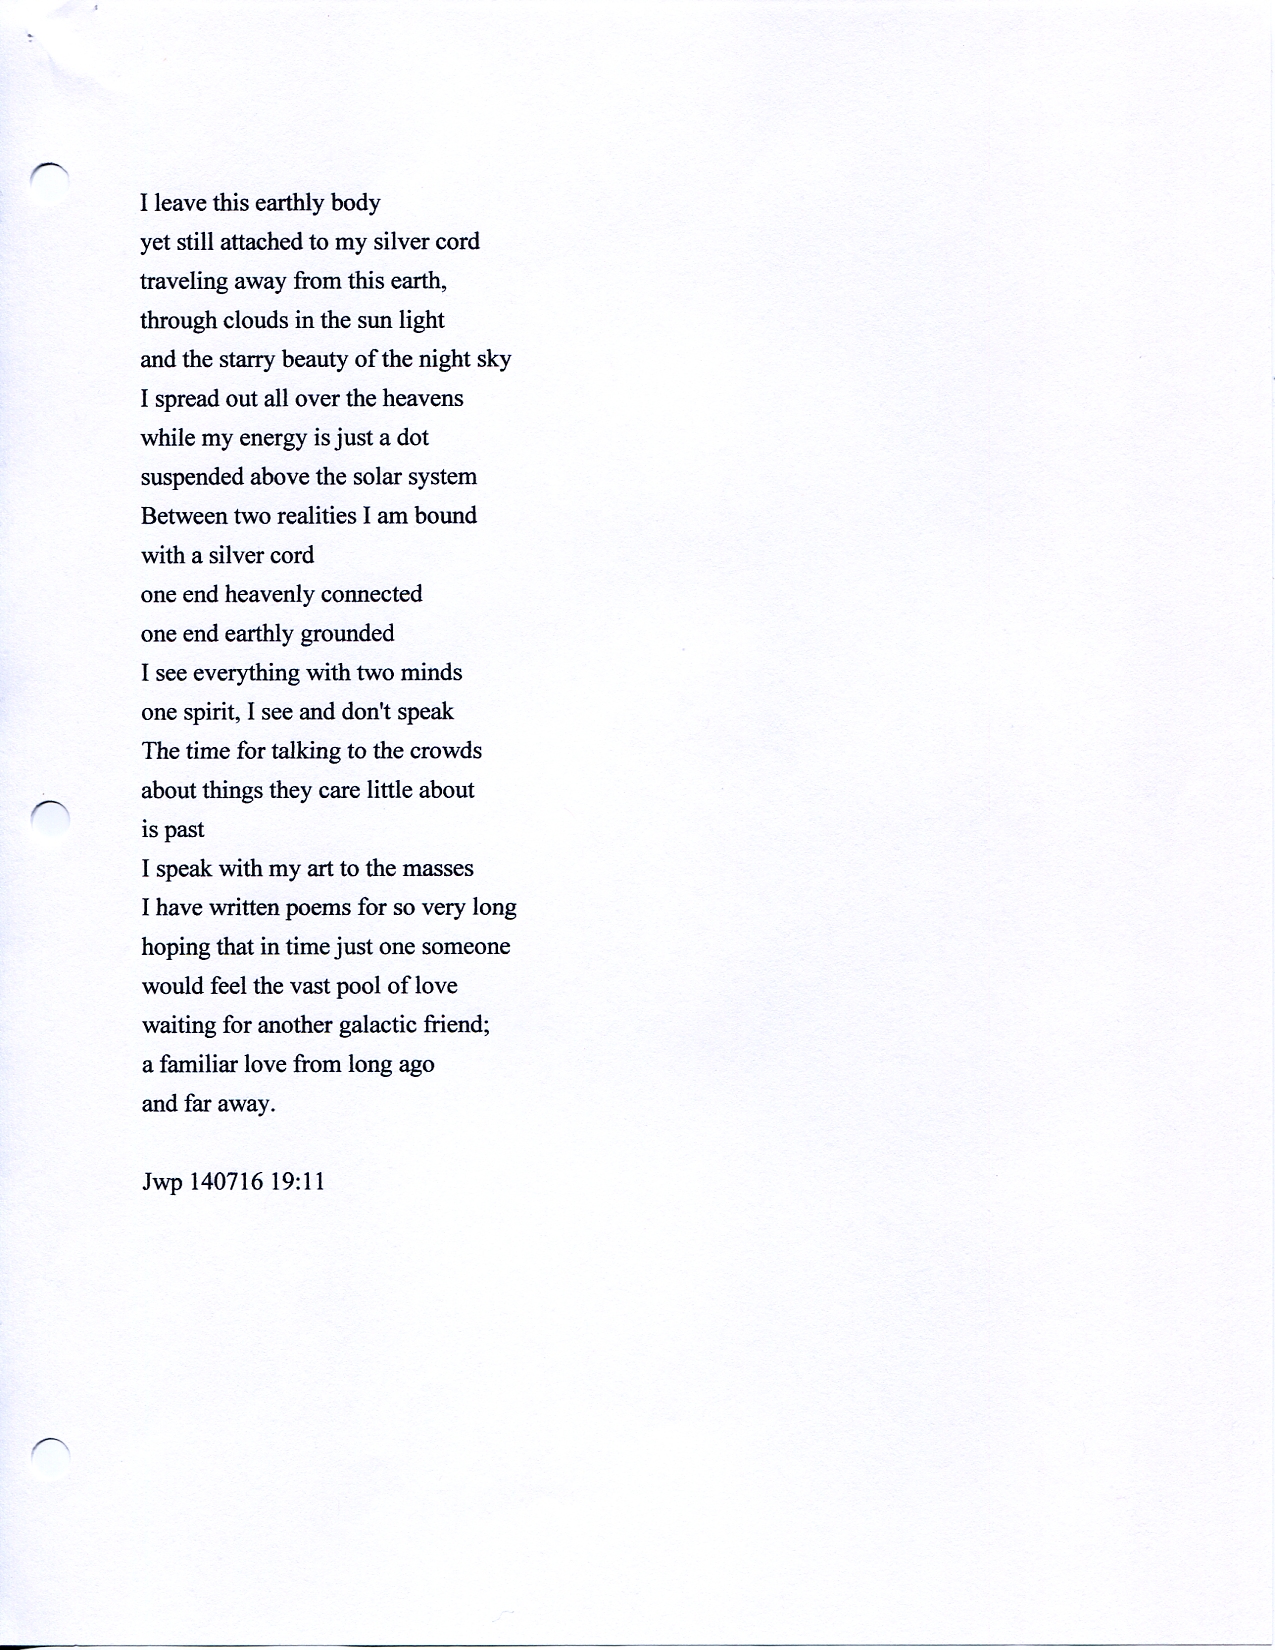 John WorldPeace Poems 2013